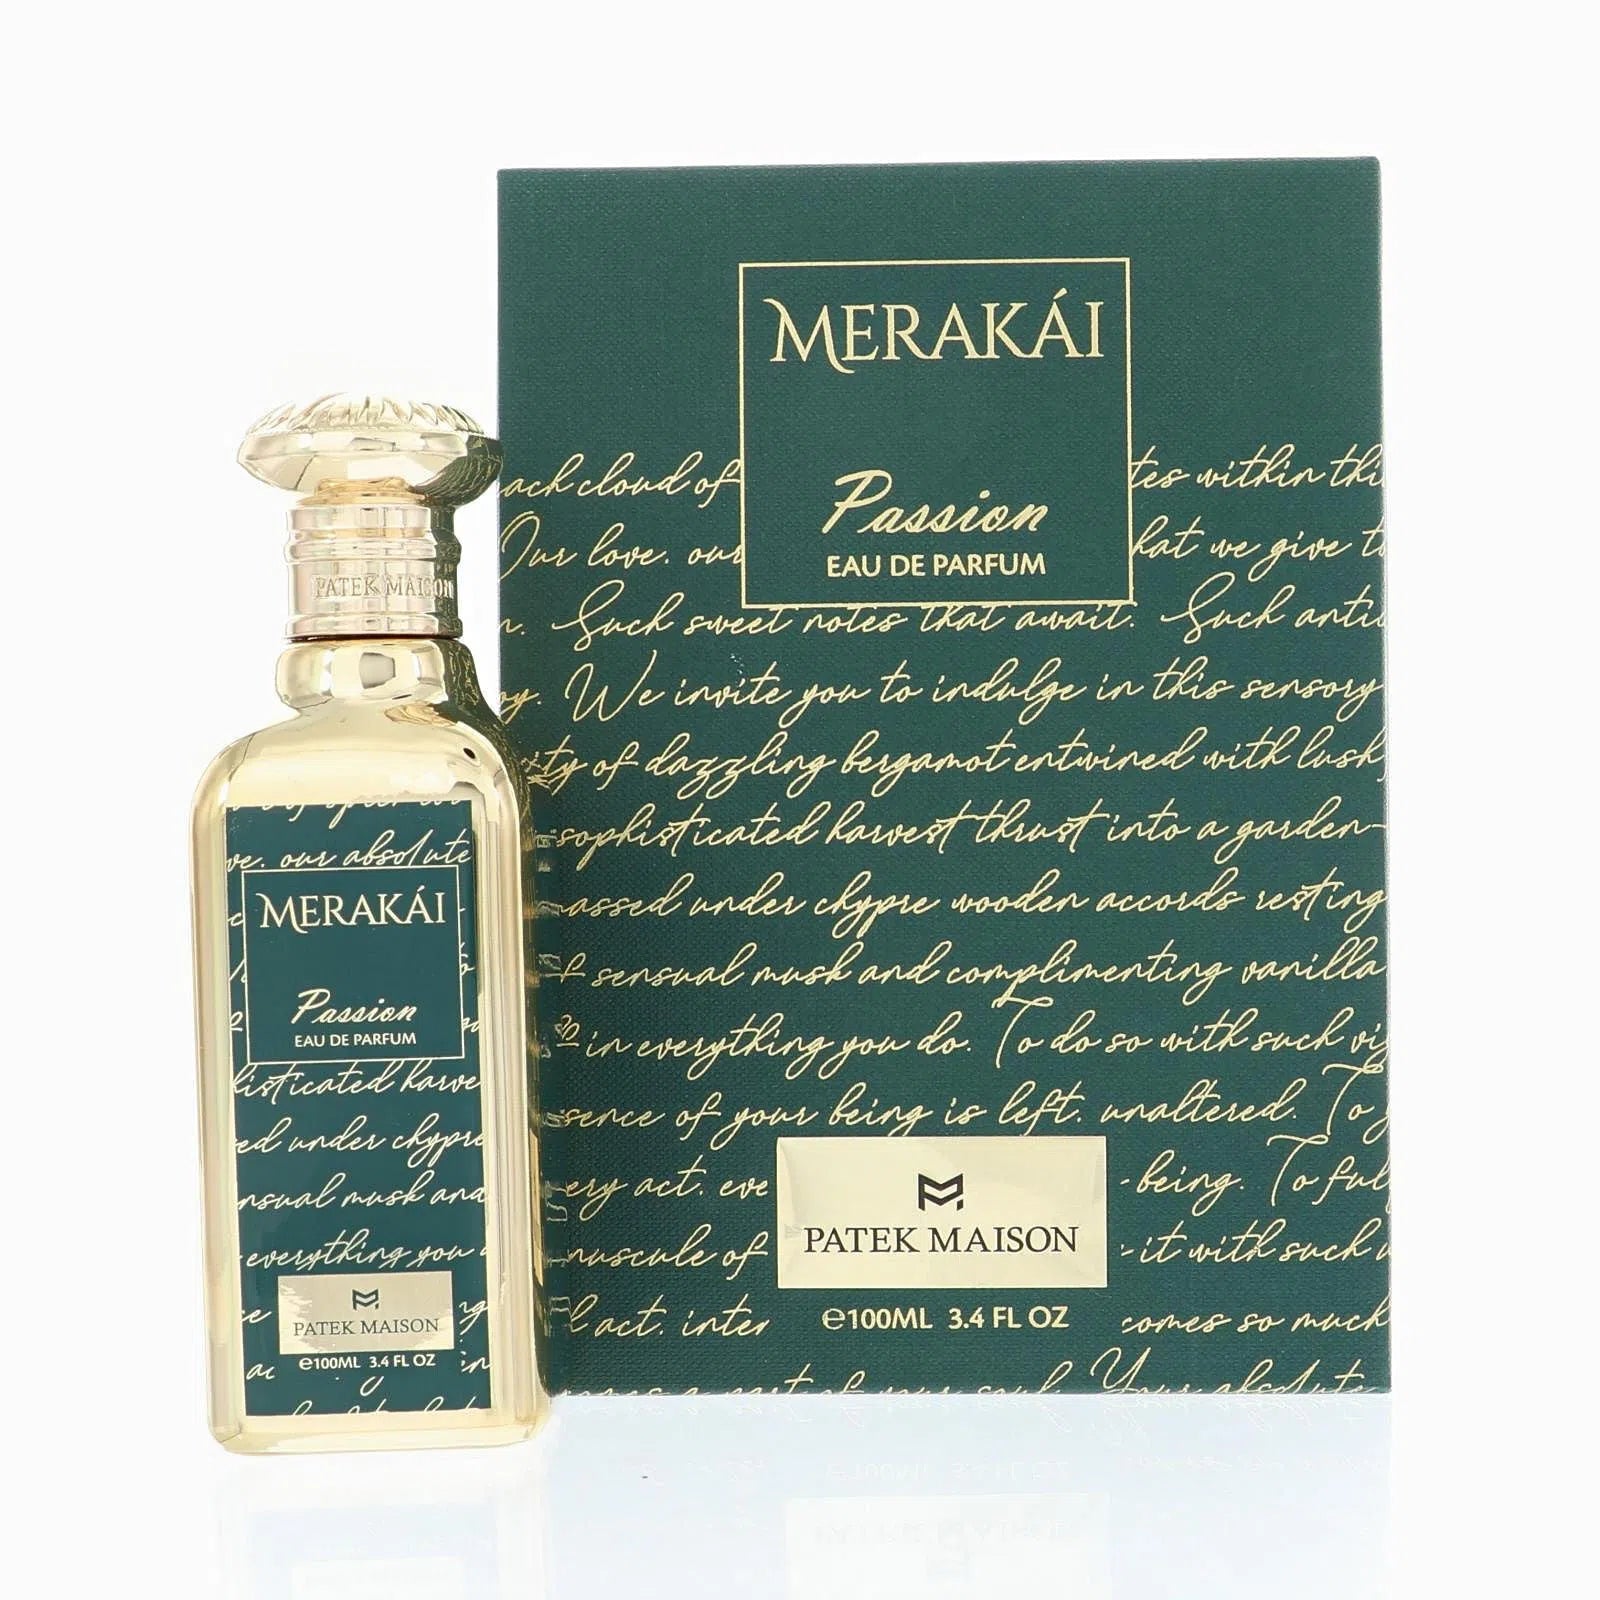 Perfume Patek Maison Merakai Passion EDP (M) / 100 ml - 850039142024- Prive Perfumes Honduras